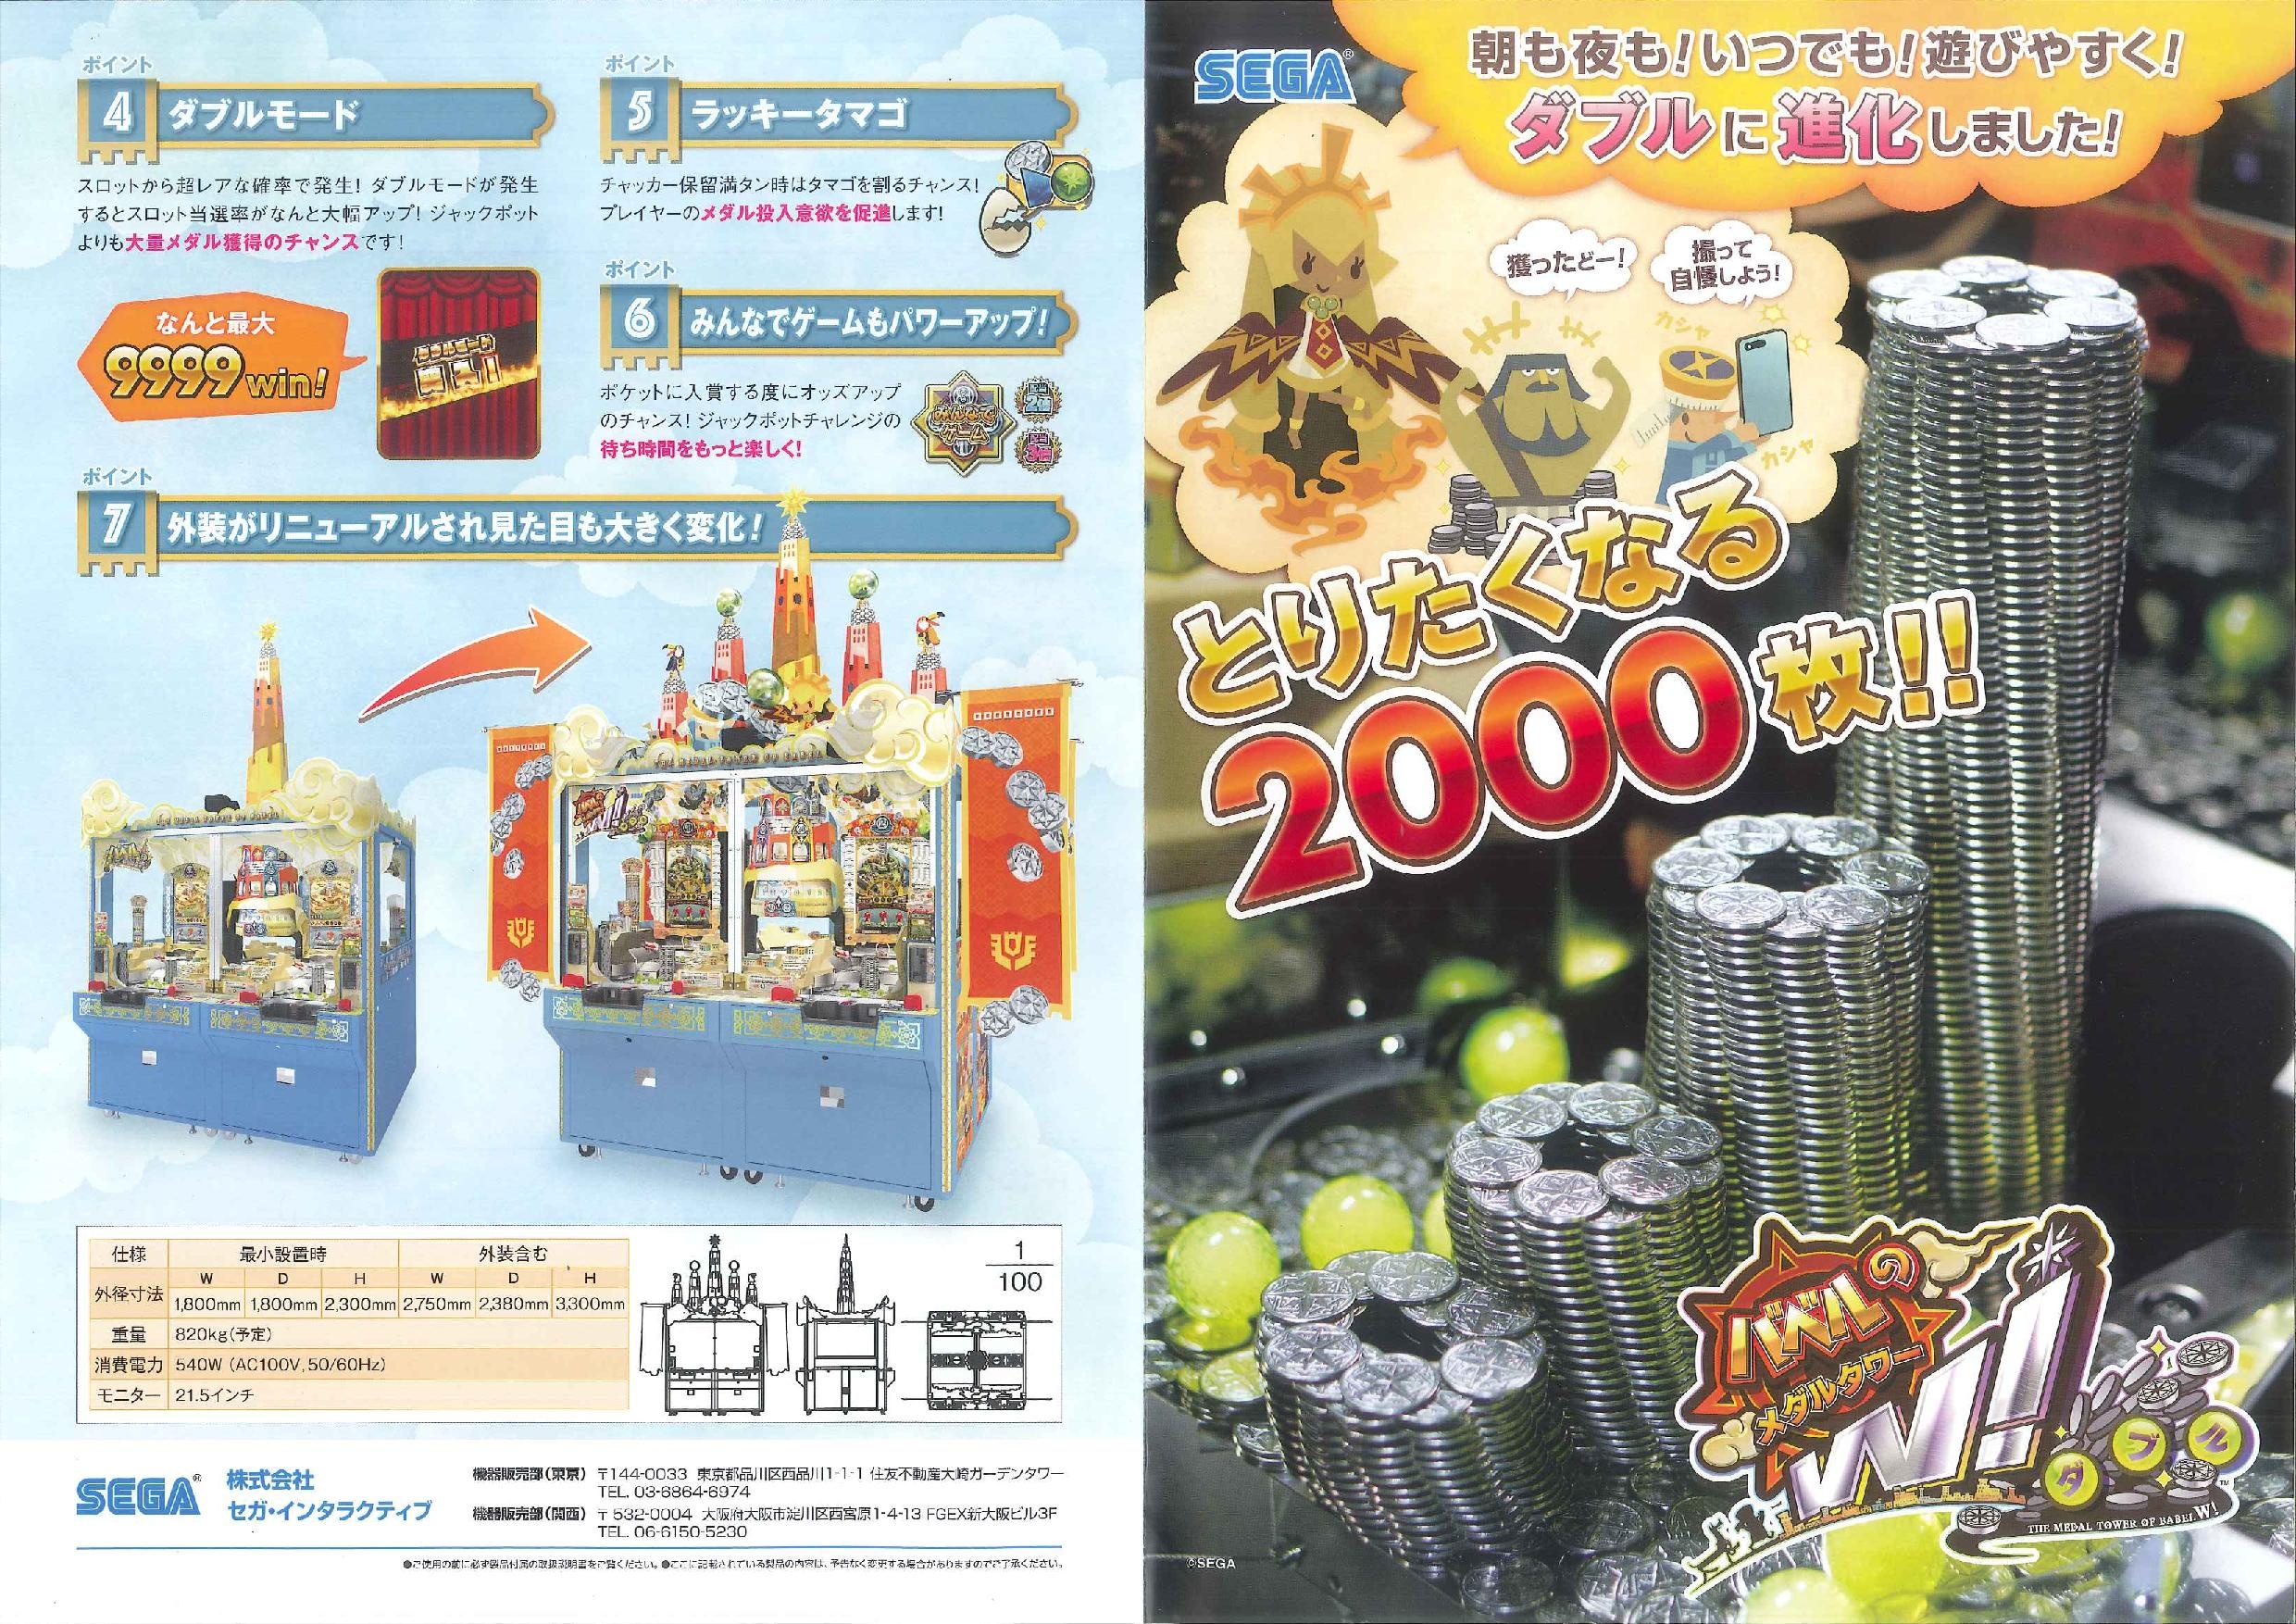 BabelNoMedalTowerW Arcade JP Flyer.pdf